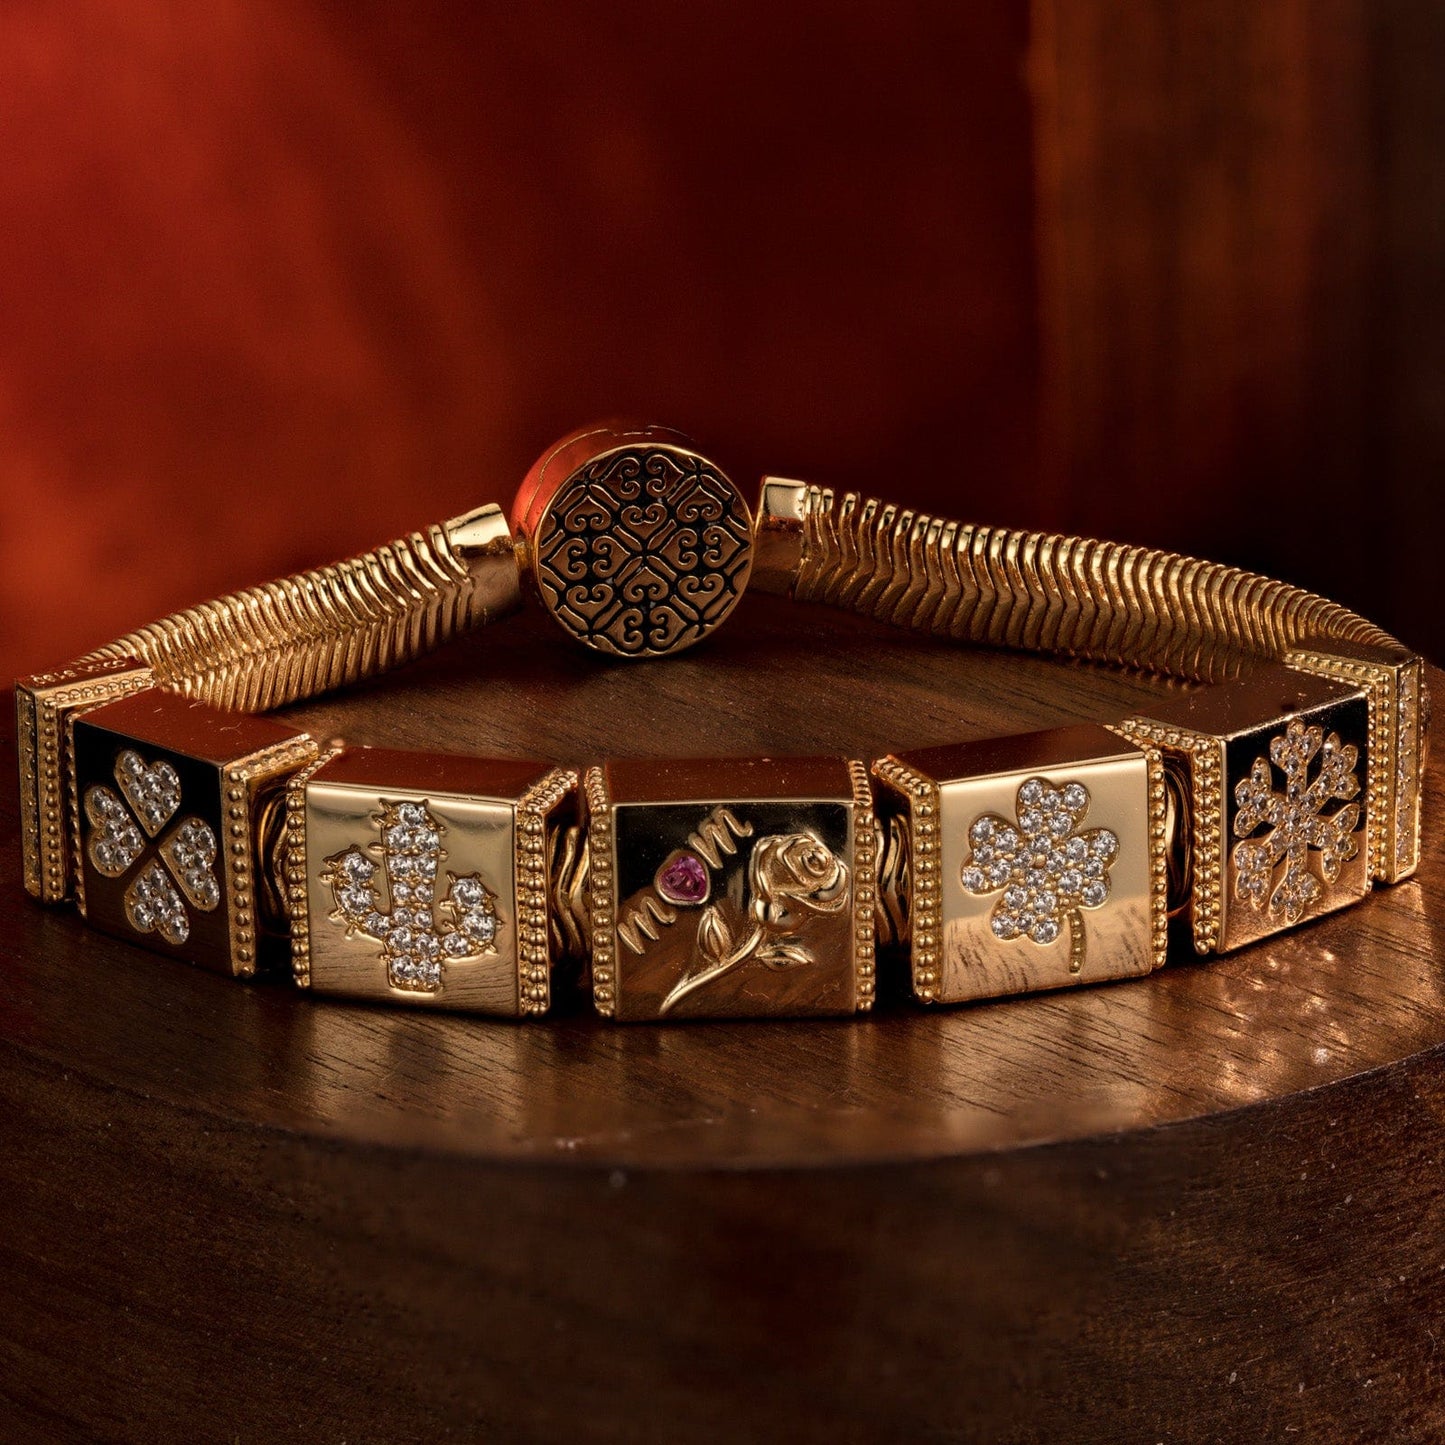 Sterling Silver Enchanted Blossom Rectangular Charms Bracelet Set In 14K Gold Plated